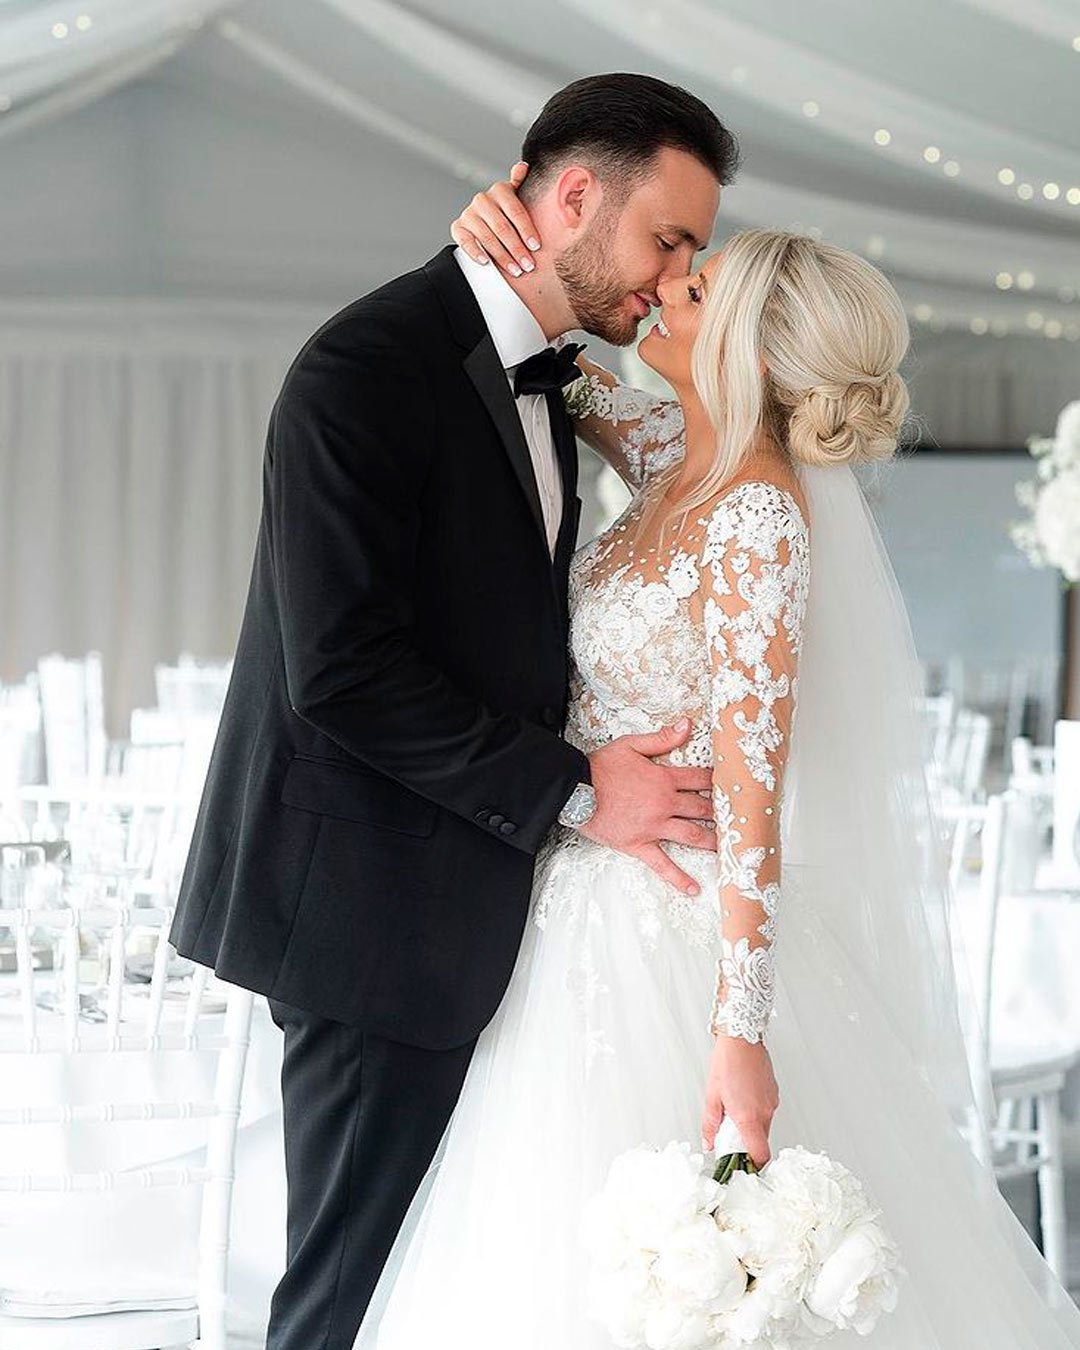 american wedding traditions vows bride groom kissing